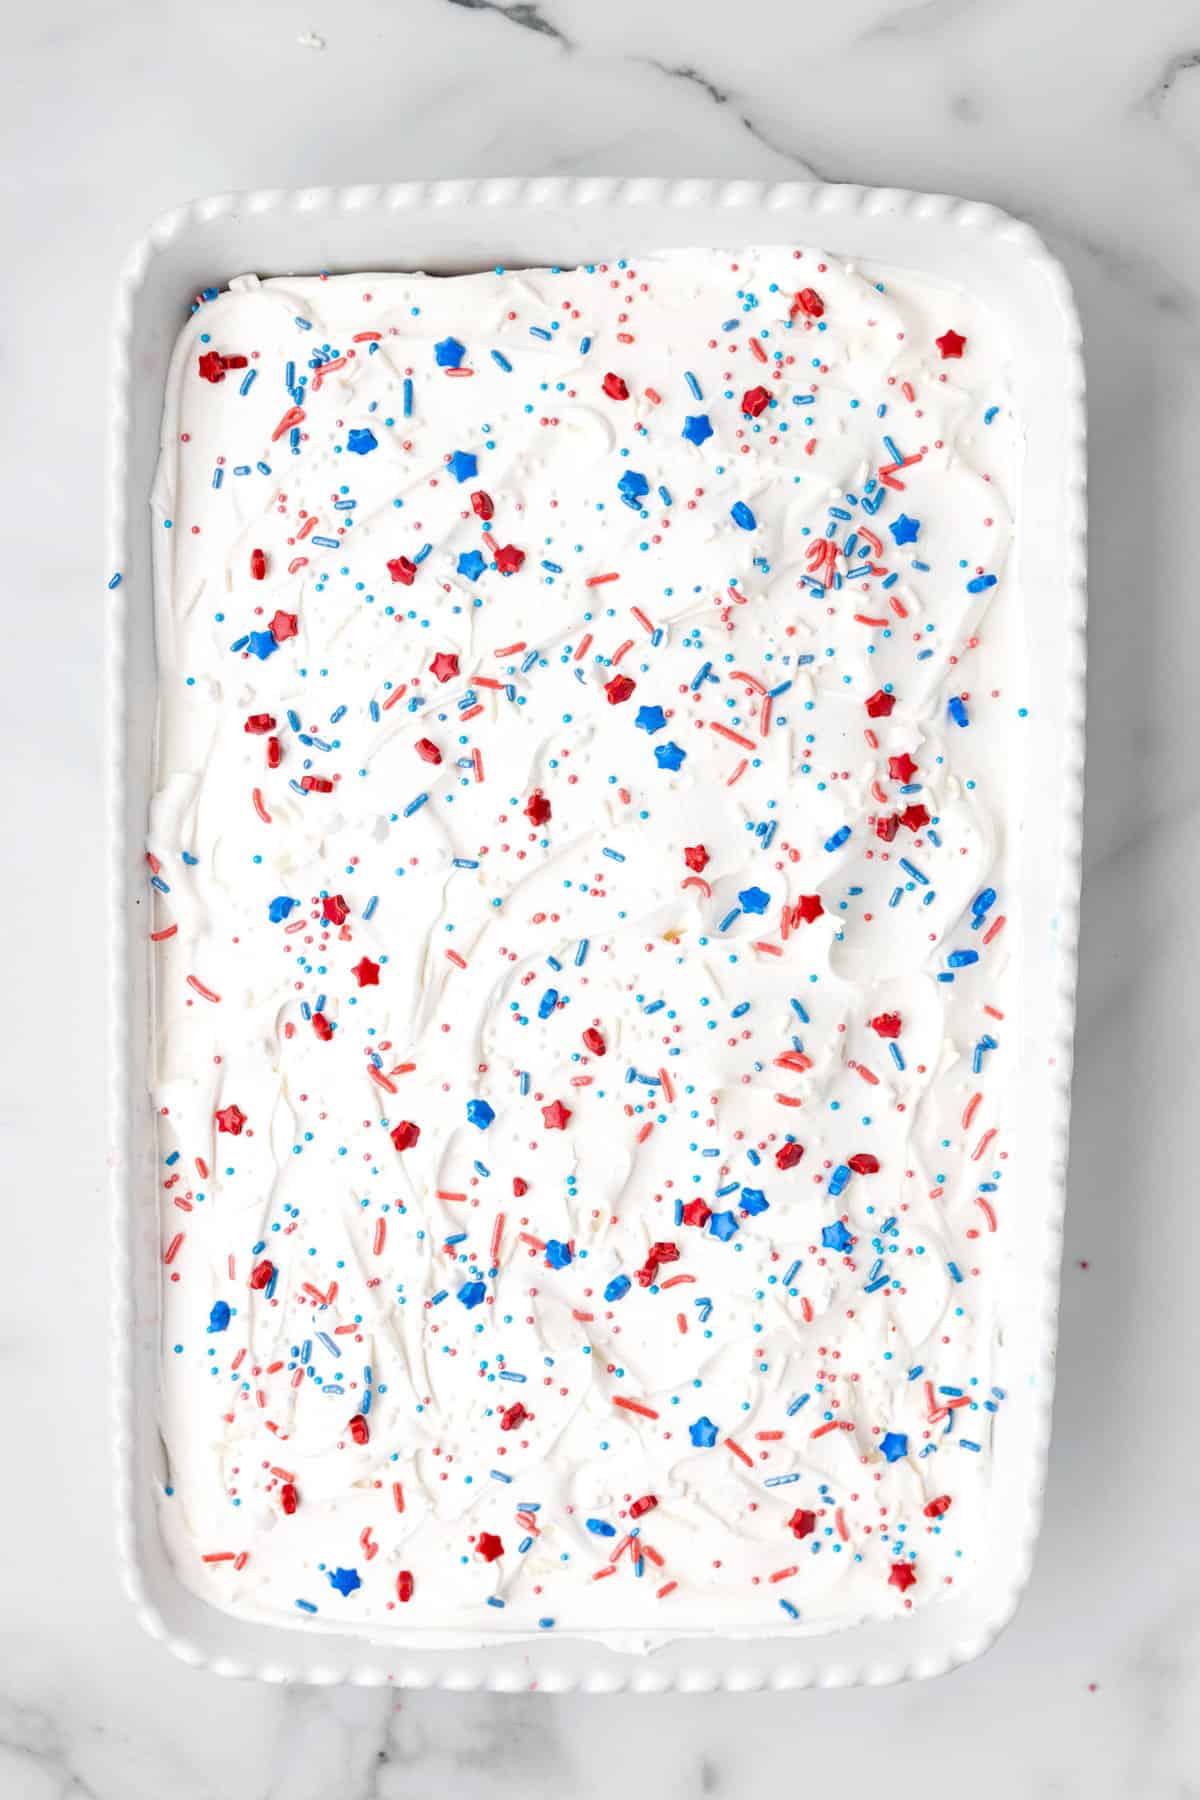 Adding patriotic sprinkles to frosting for Red White Blue Poke Cake